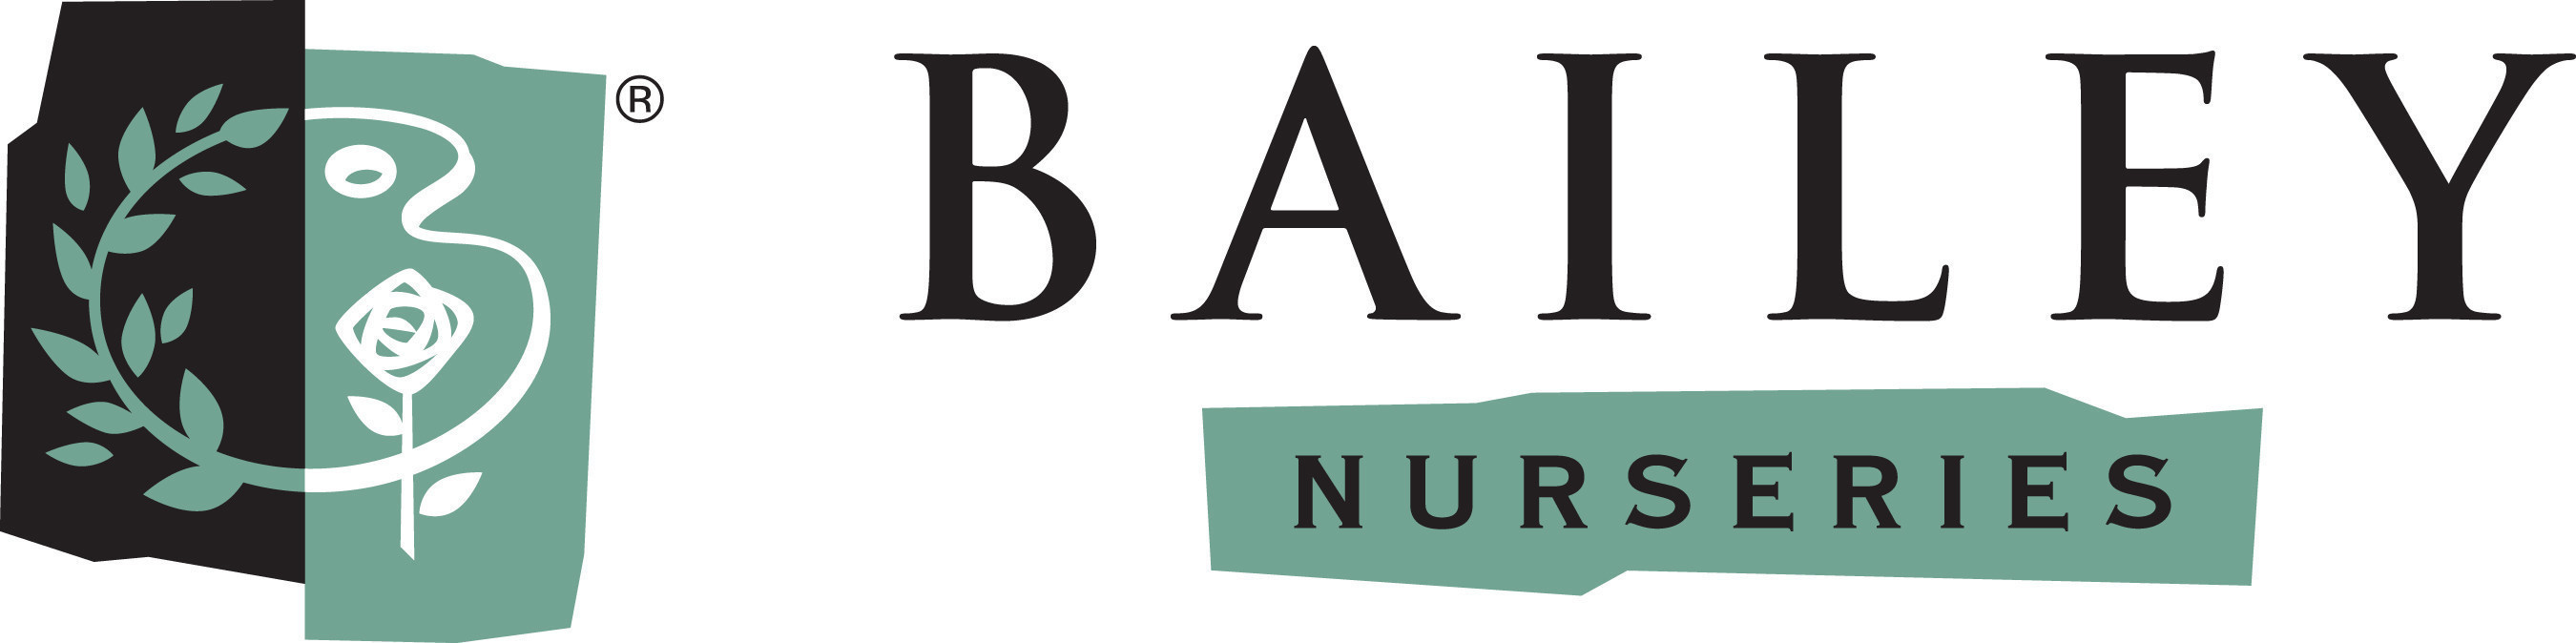 Bailey Nurseries logo